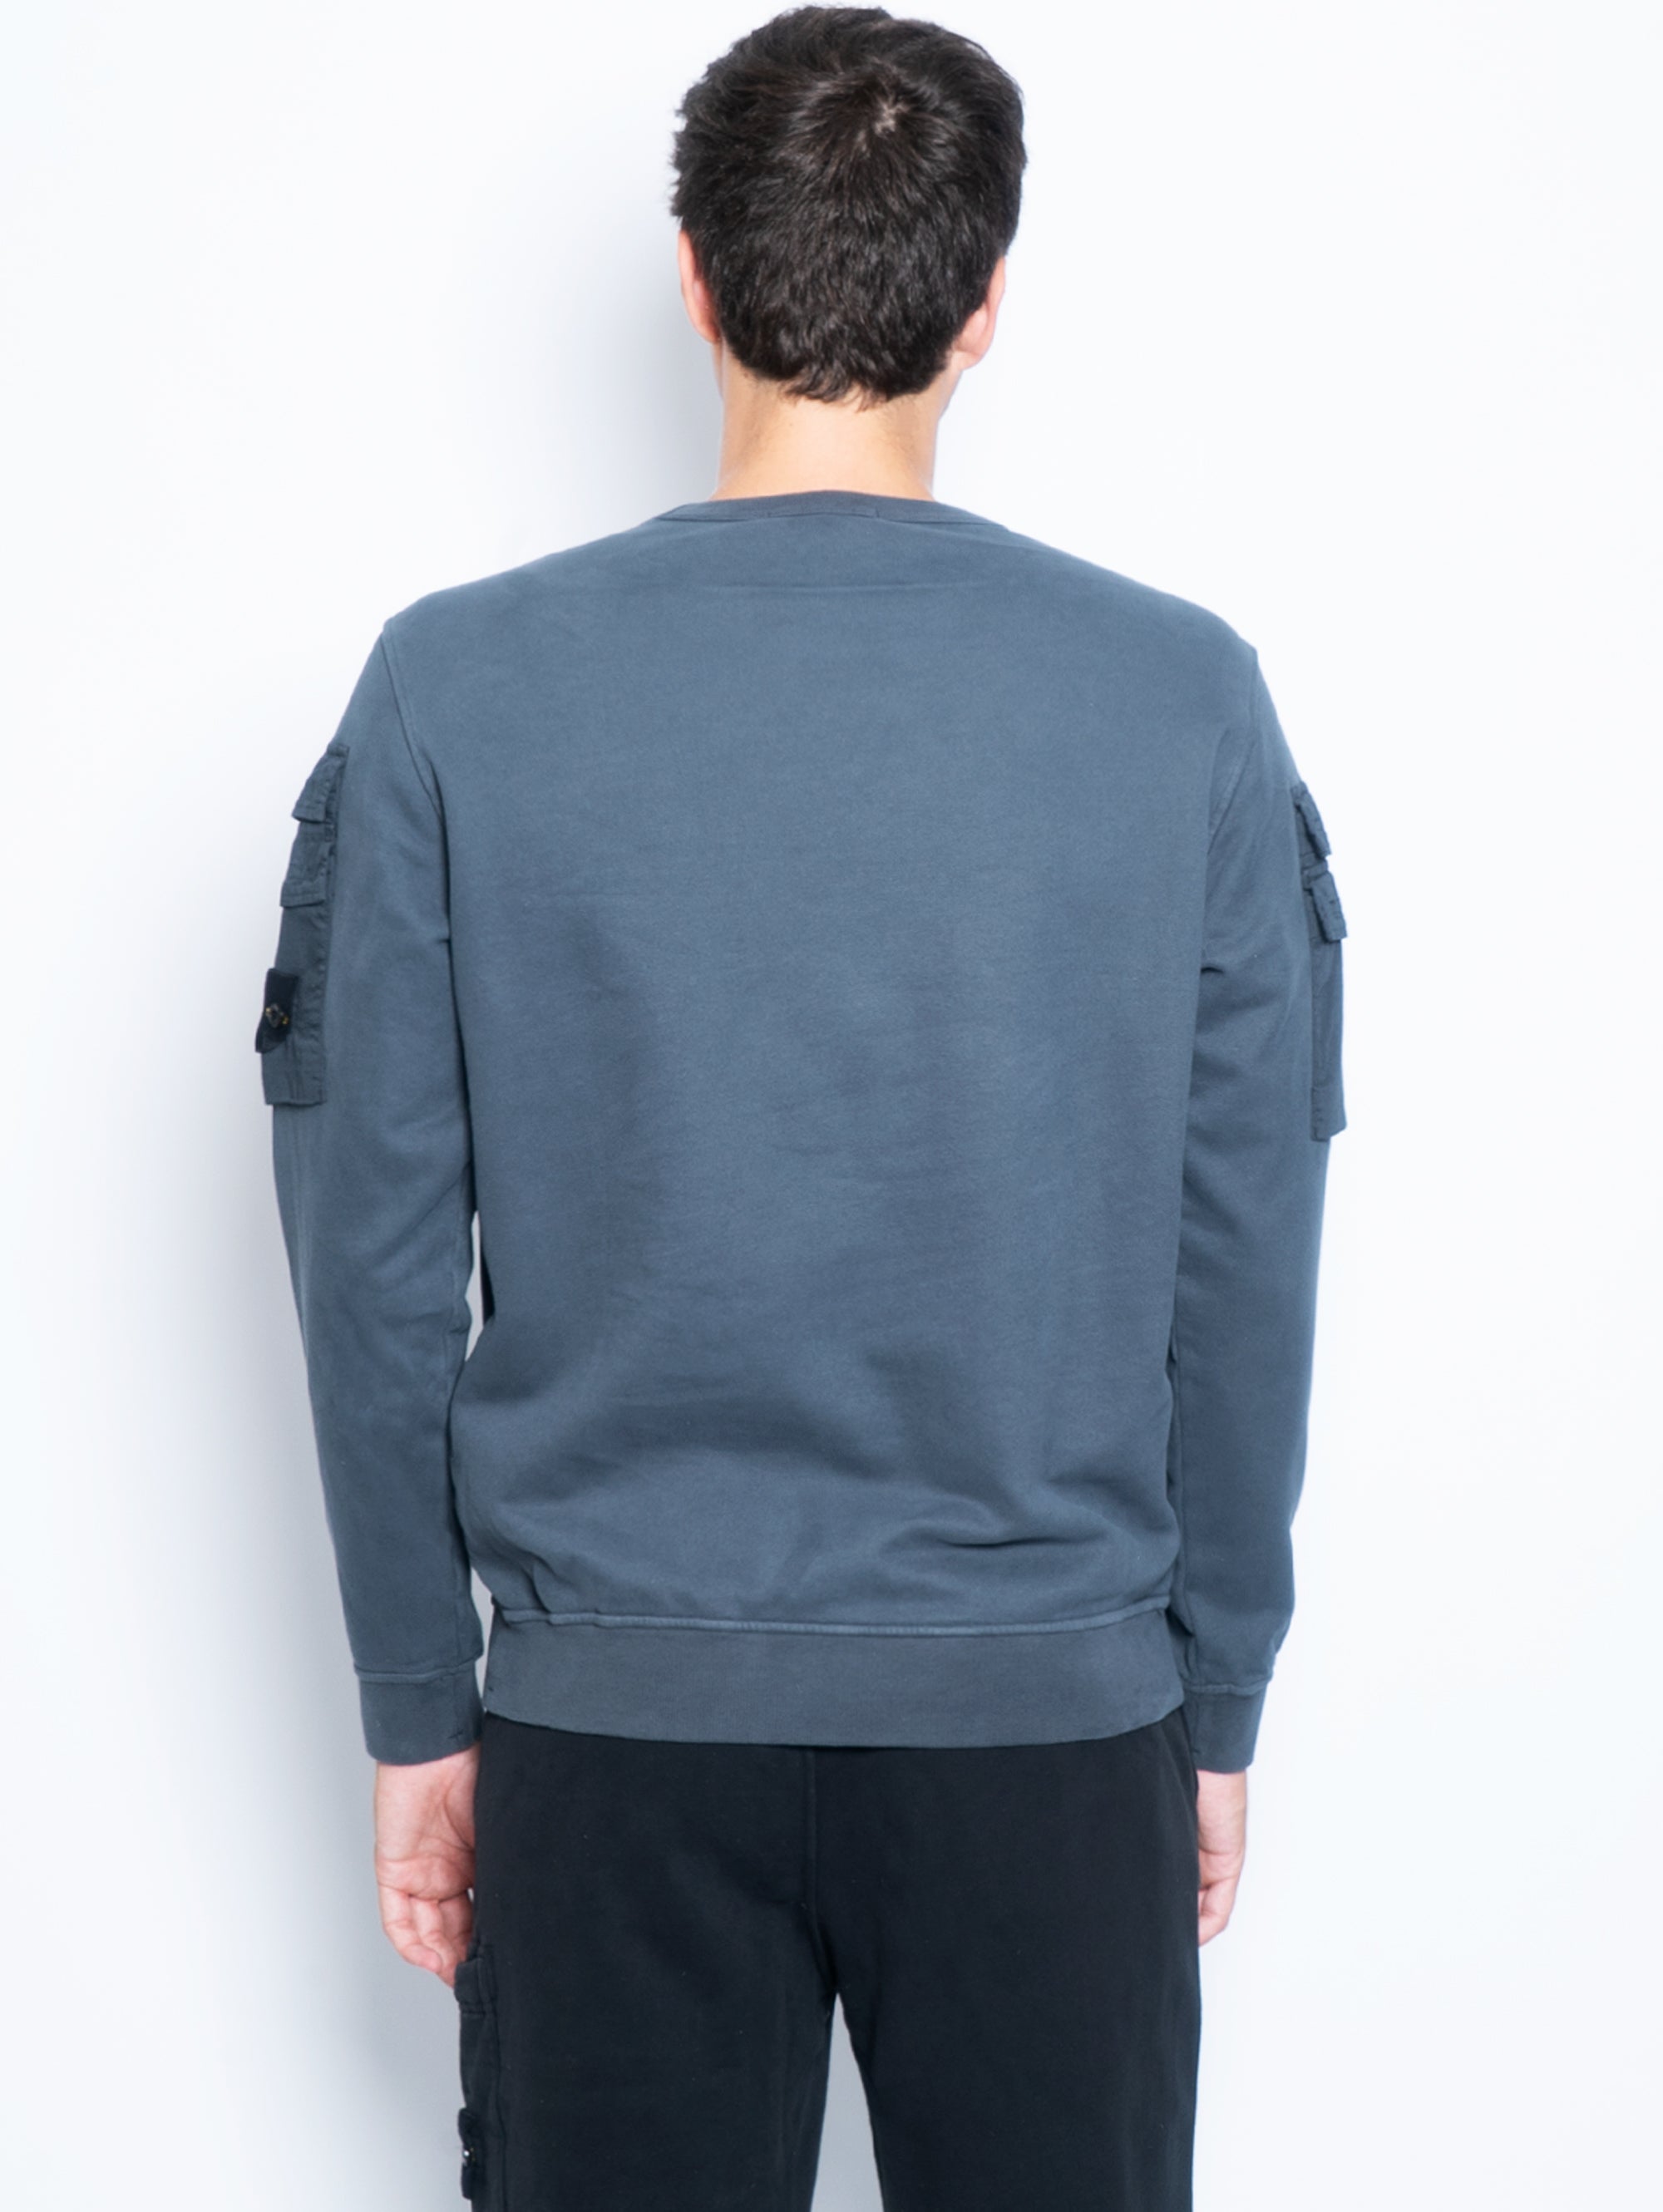 Gray Cotton Sweatshirt with Pockets